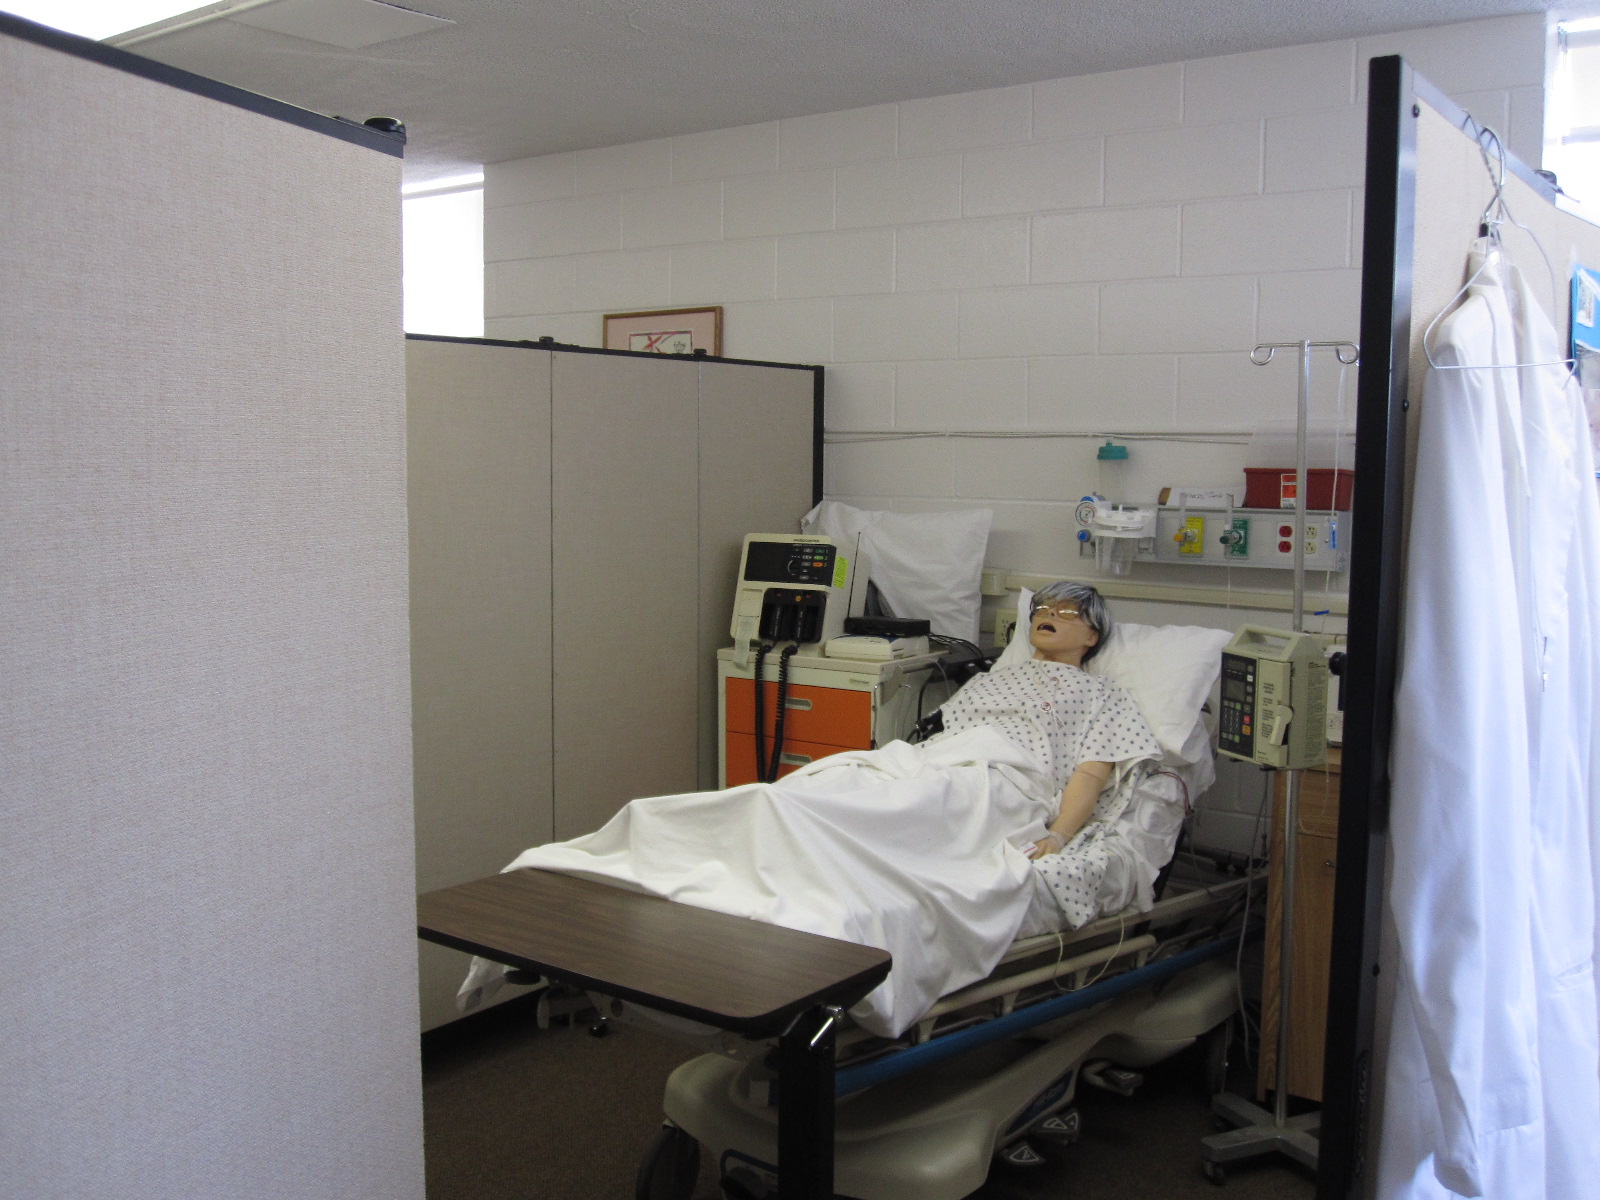 Room Divider Screens provide separation simulated hospital setting